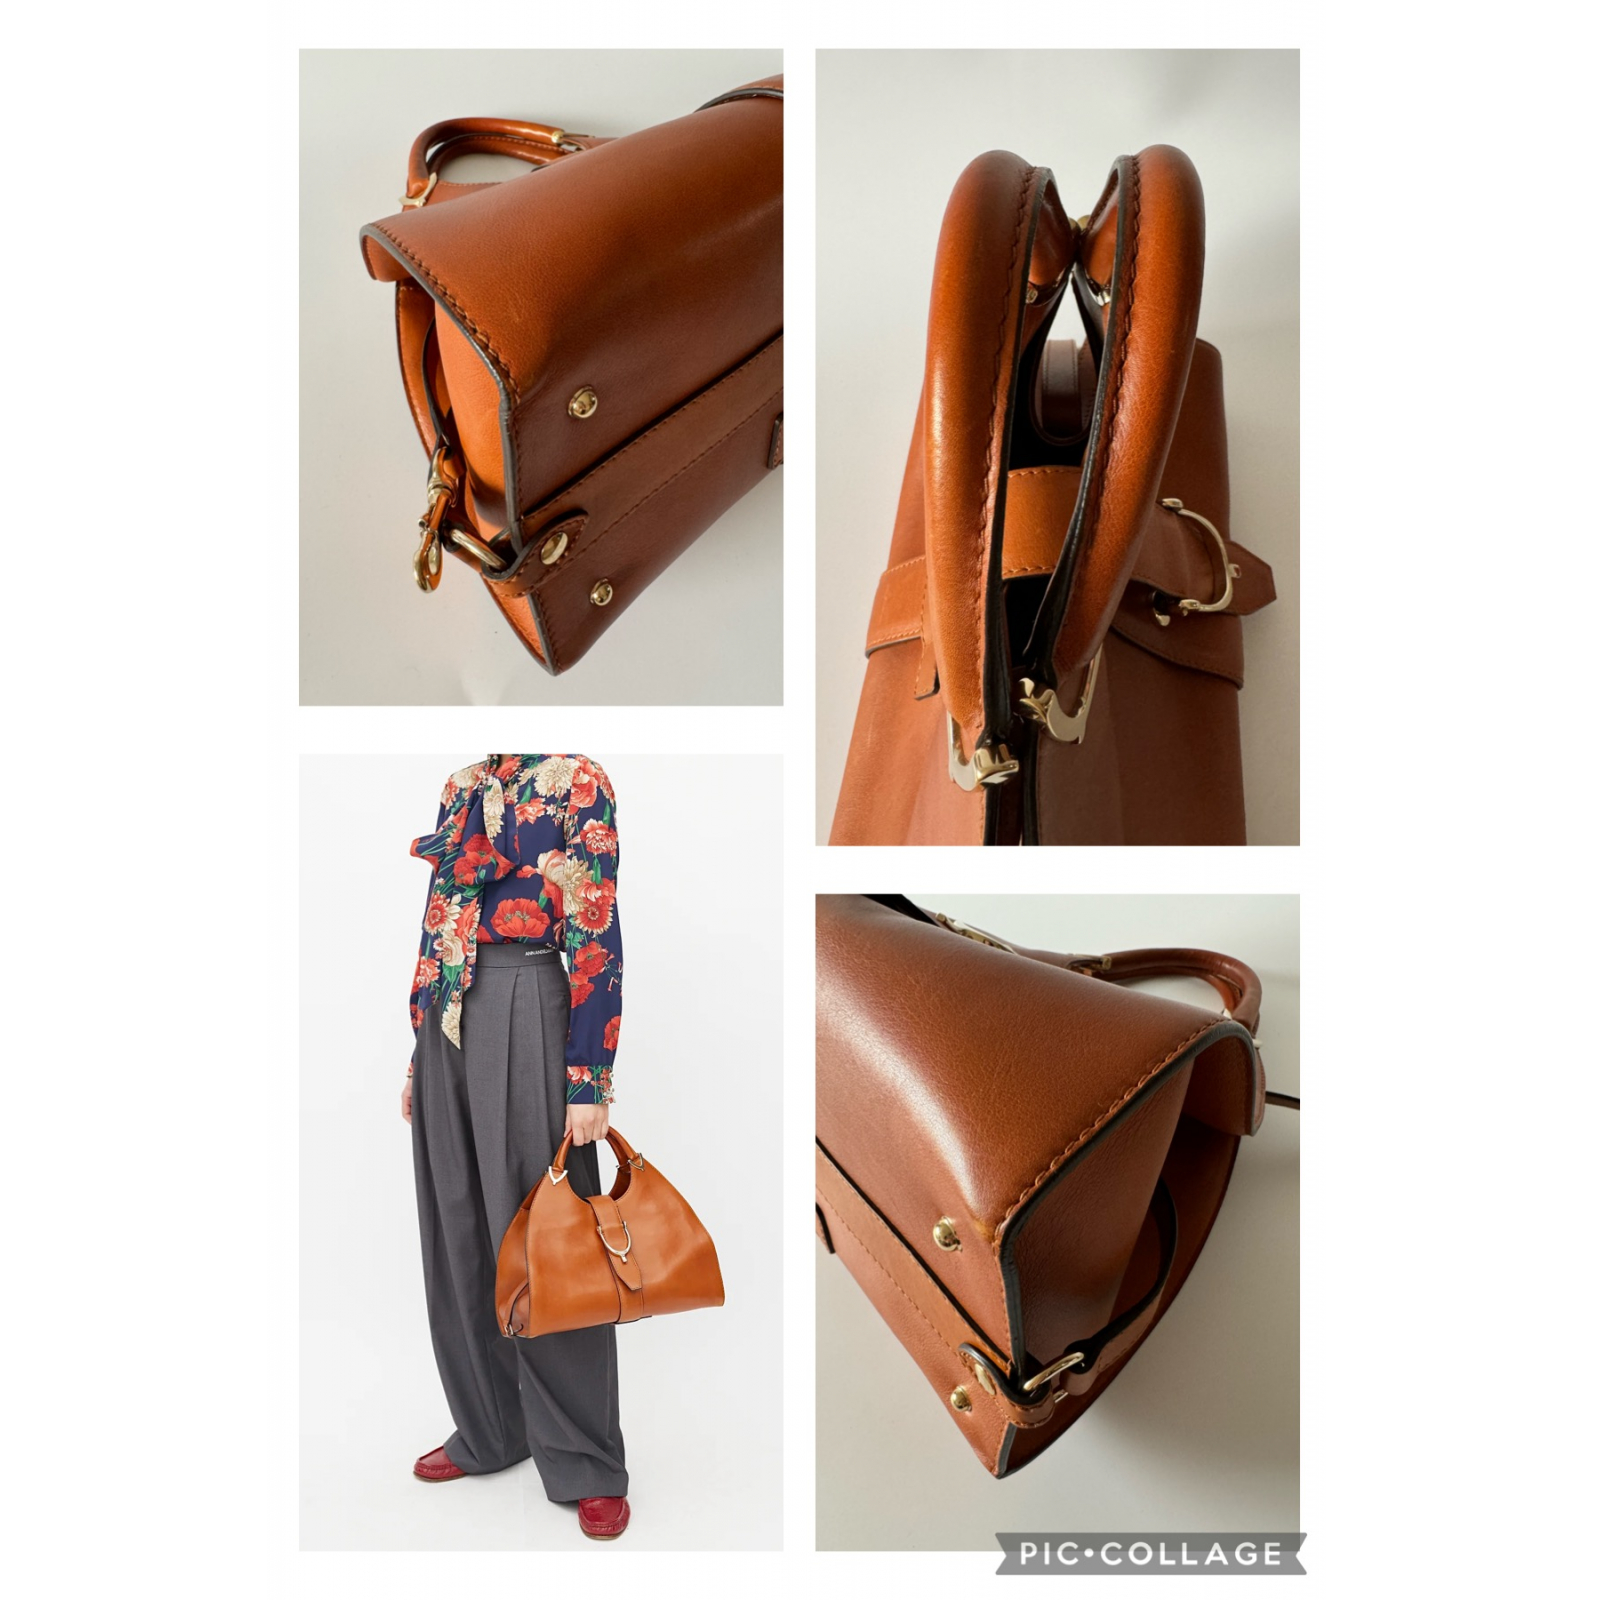 GUCCI Stirrup Leather Top Handle Bag Torebka